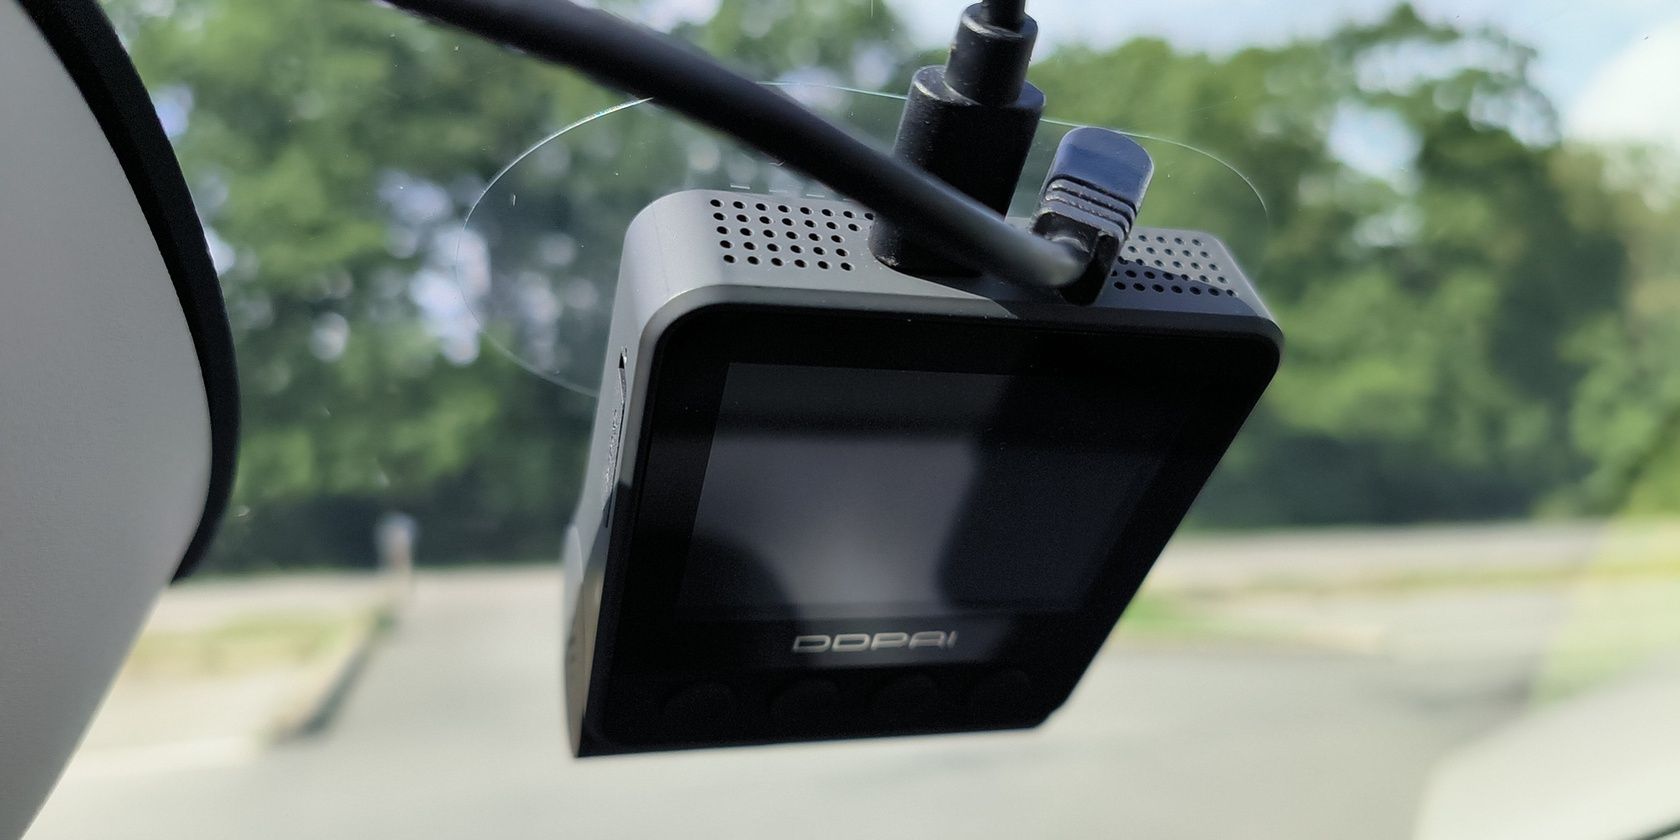 DDPAI Z50 4K 2160P Dash Cam GPS Front + Rear Cam IPS Monitor GPS Version  Car Dashcam DVR Decoder, Dasher-SG